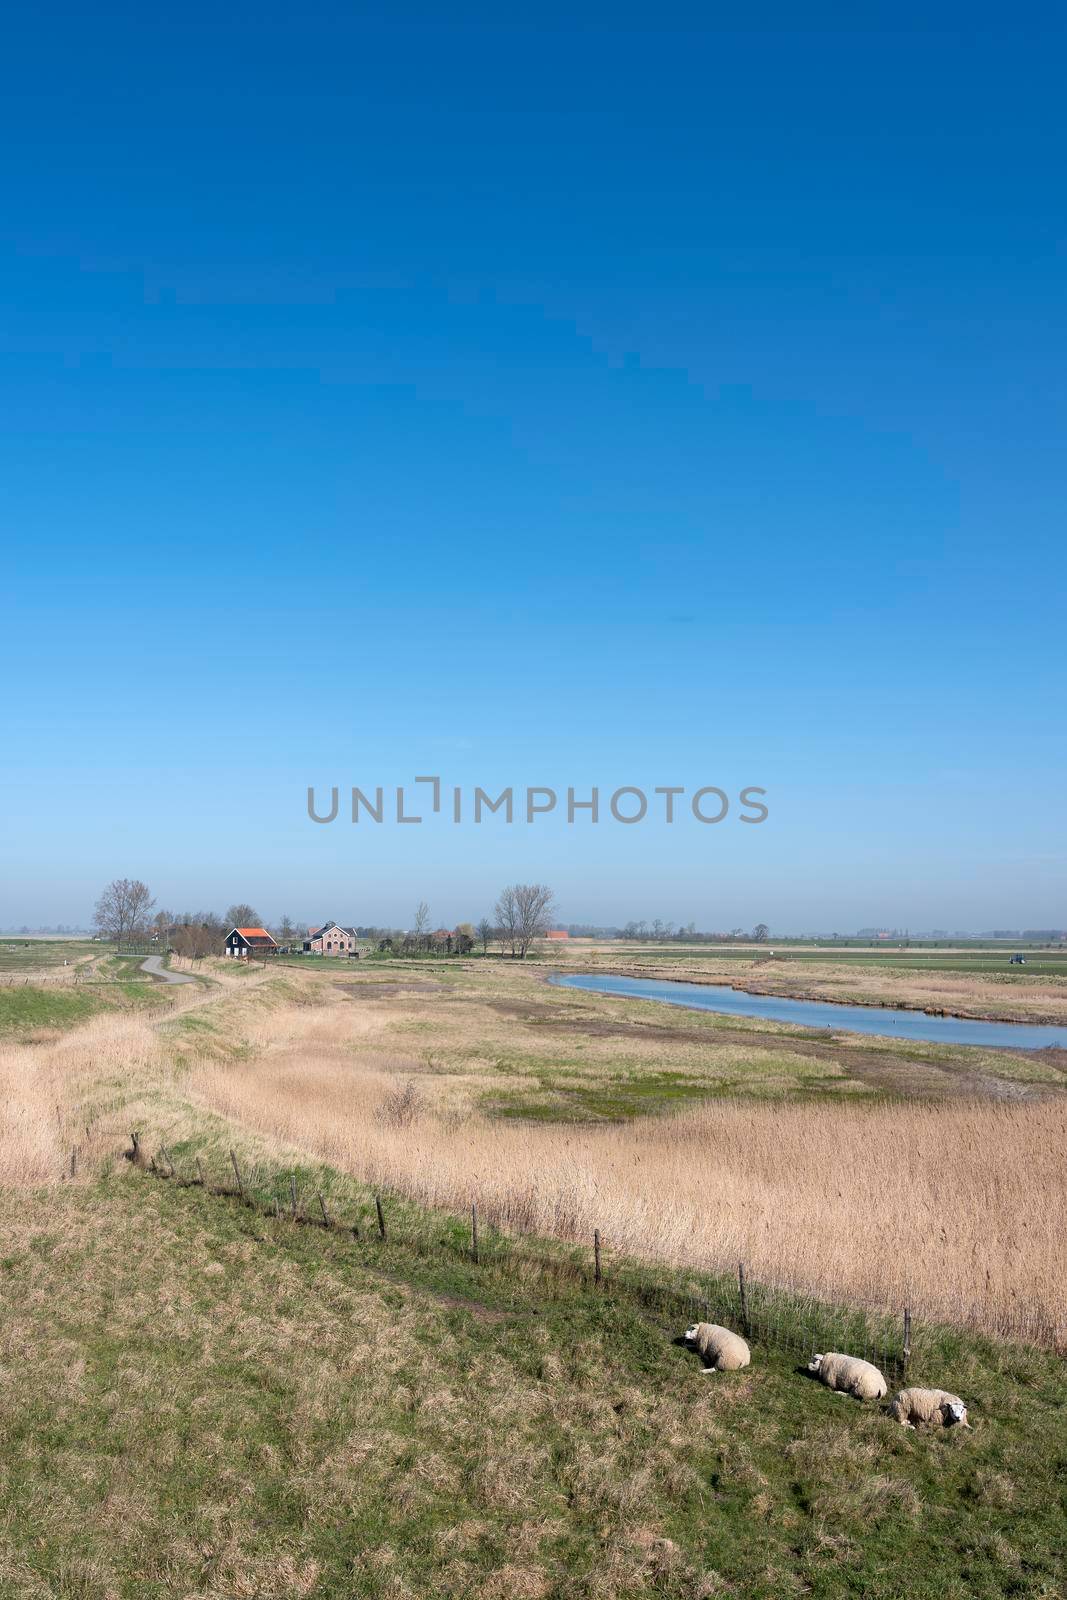 sheep in countryside landscape under blue sky on schouwen duiveland in dutch province of zeeland